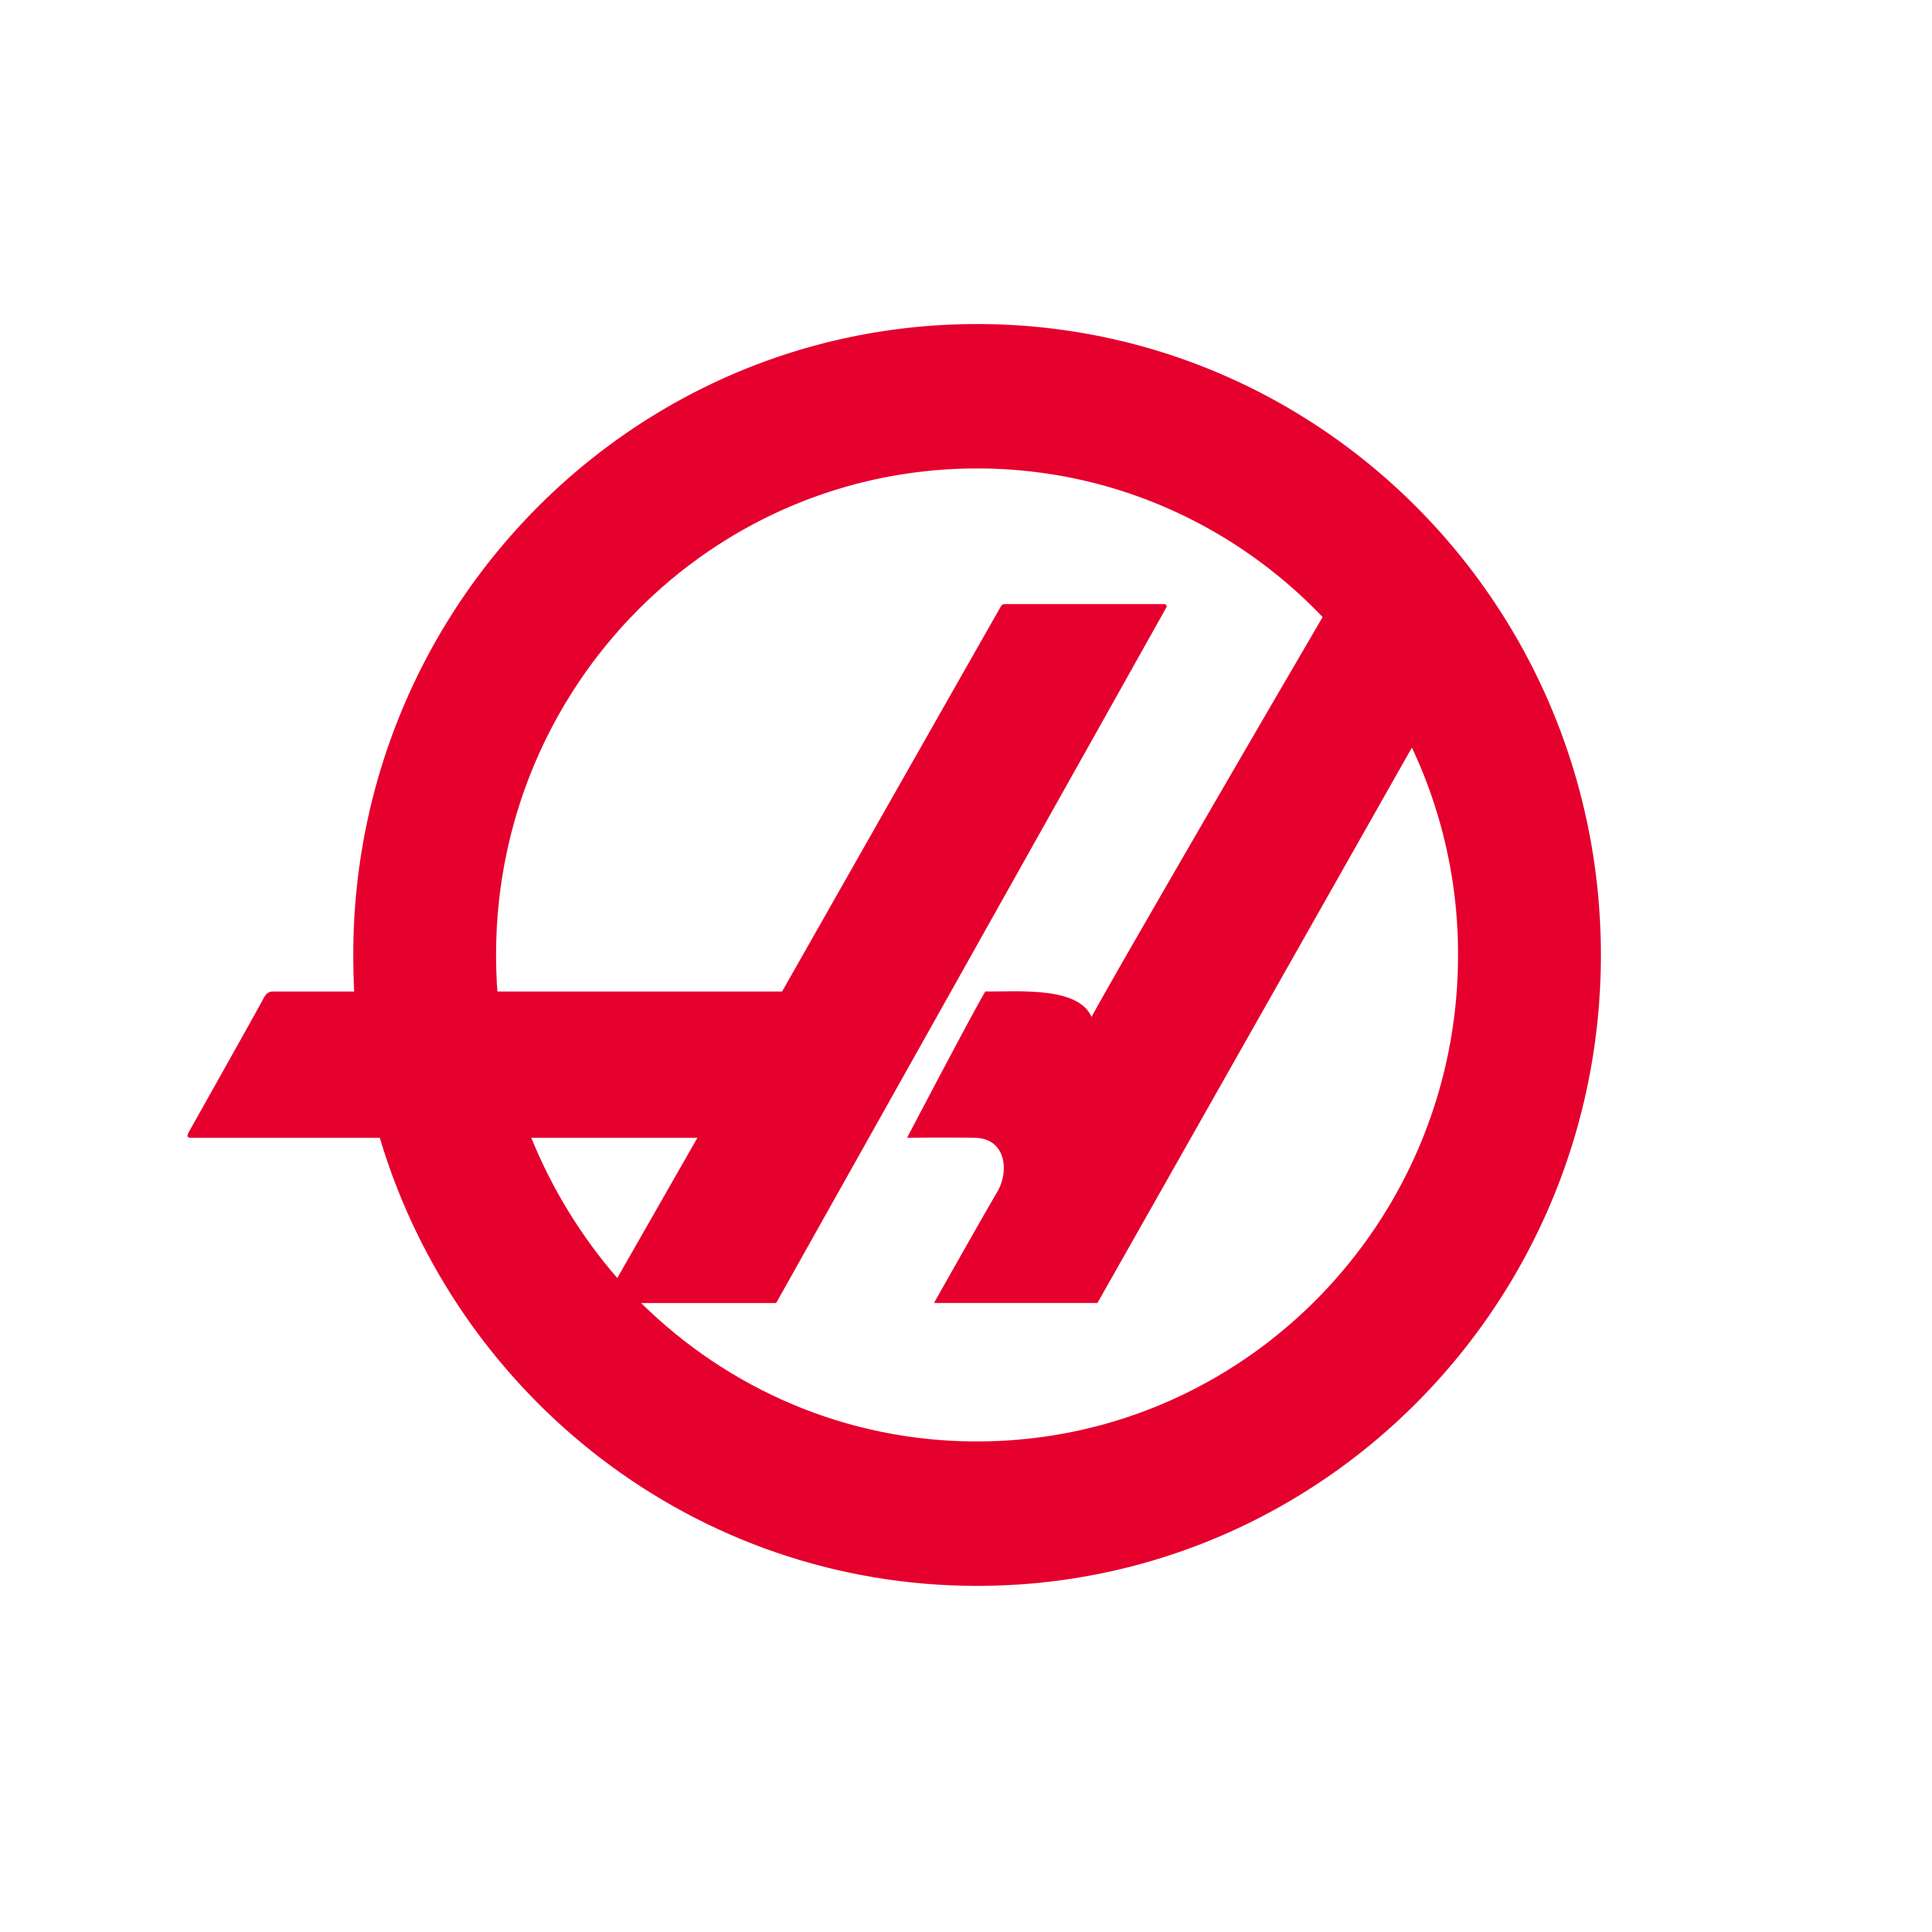 Haas F1 Team Logo PNG.